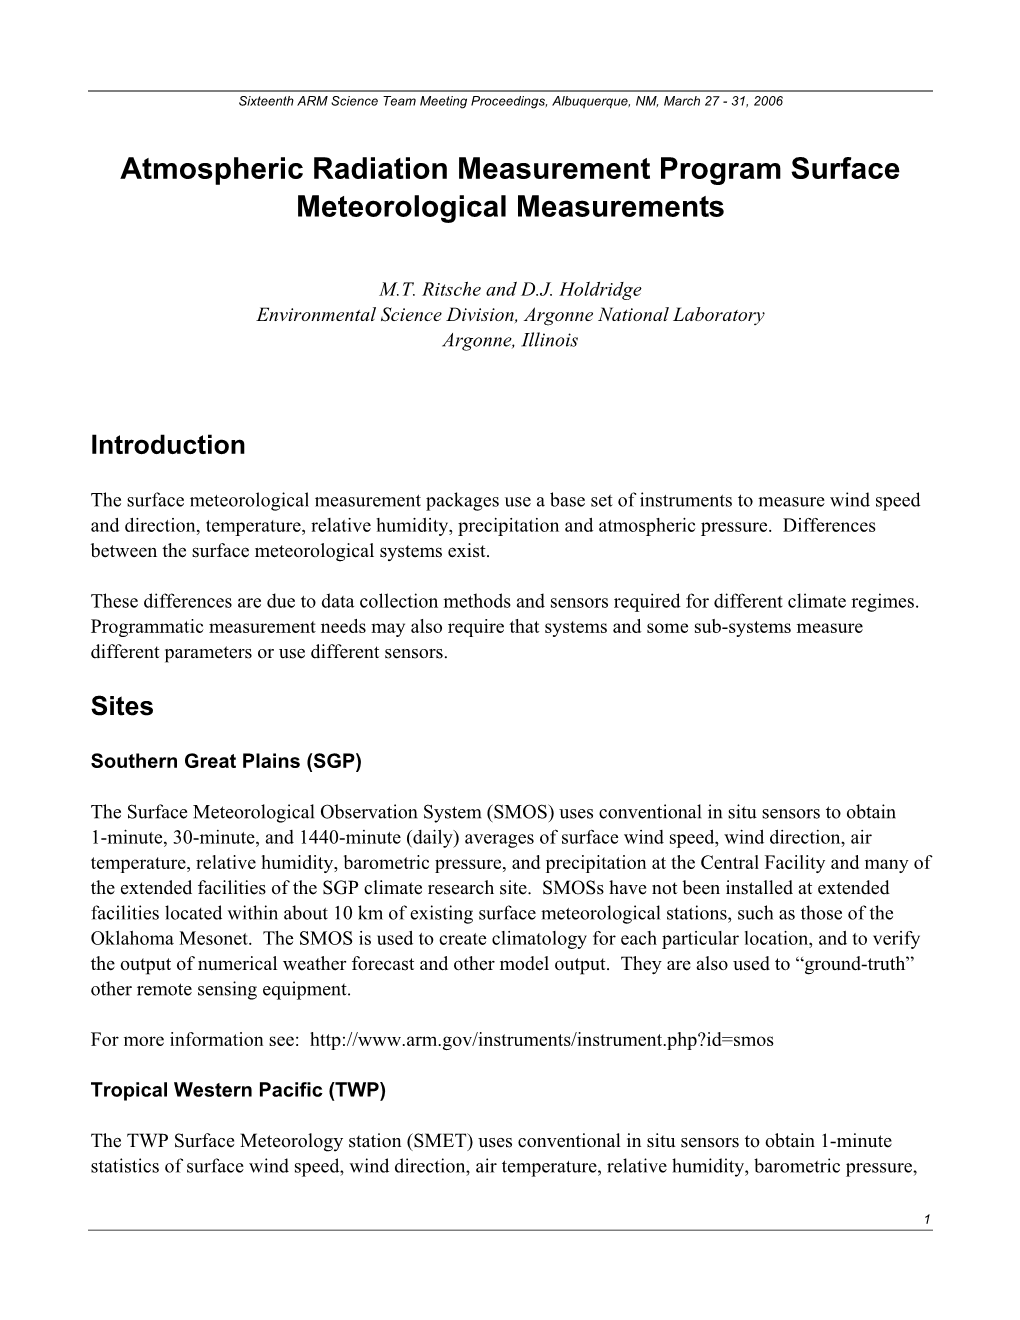 Atmospheric Radiation Measurement Program Surface Meteorological Measurements